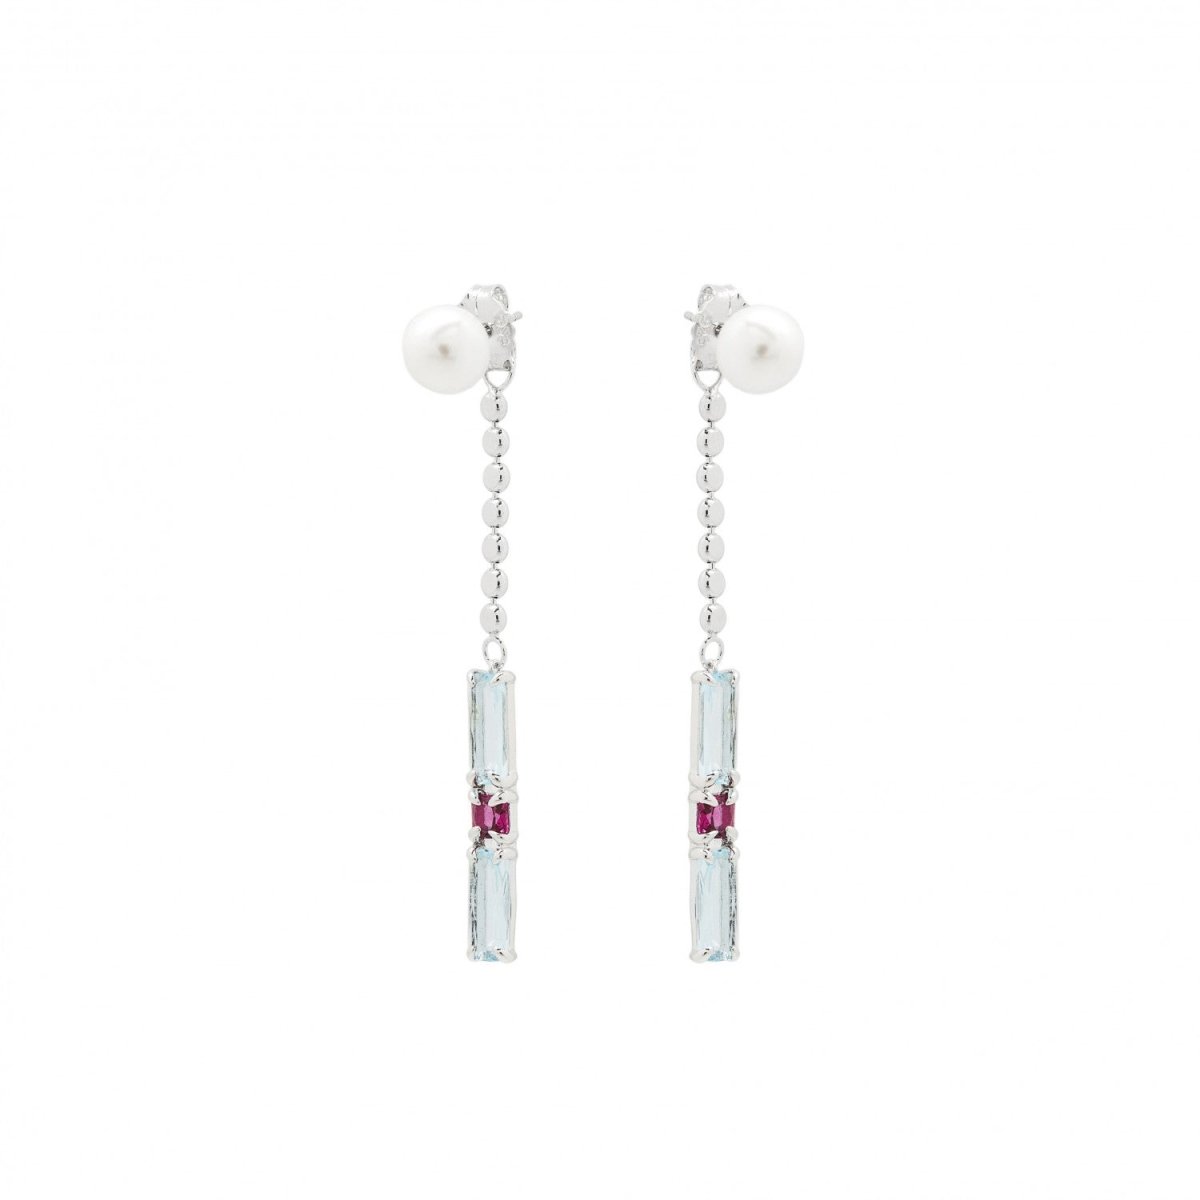 Earrings - Long earrings with pearl and adamantine quartz pendant design